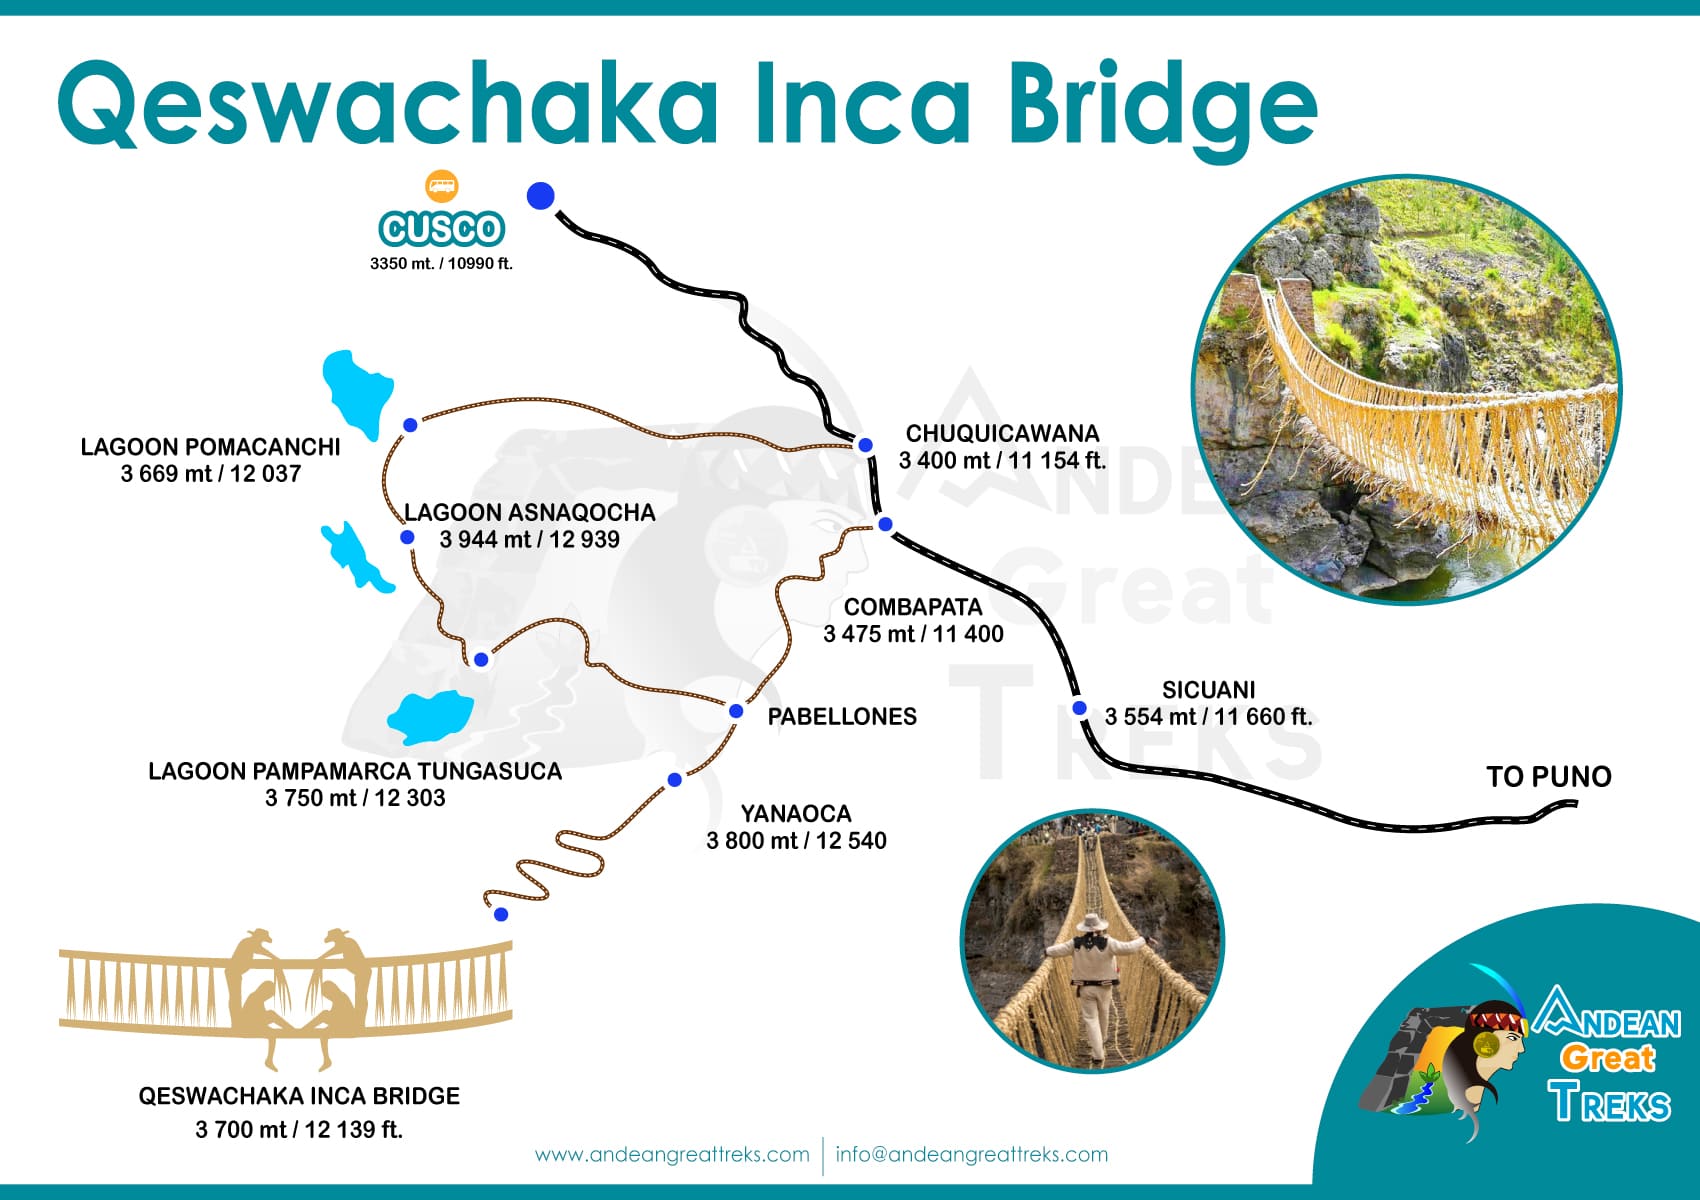 QESWACHAKA-INCA-BRIDGE-1-DAY-BY-ANDEAN-GREAT-TREKS